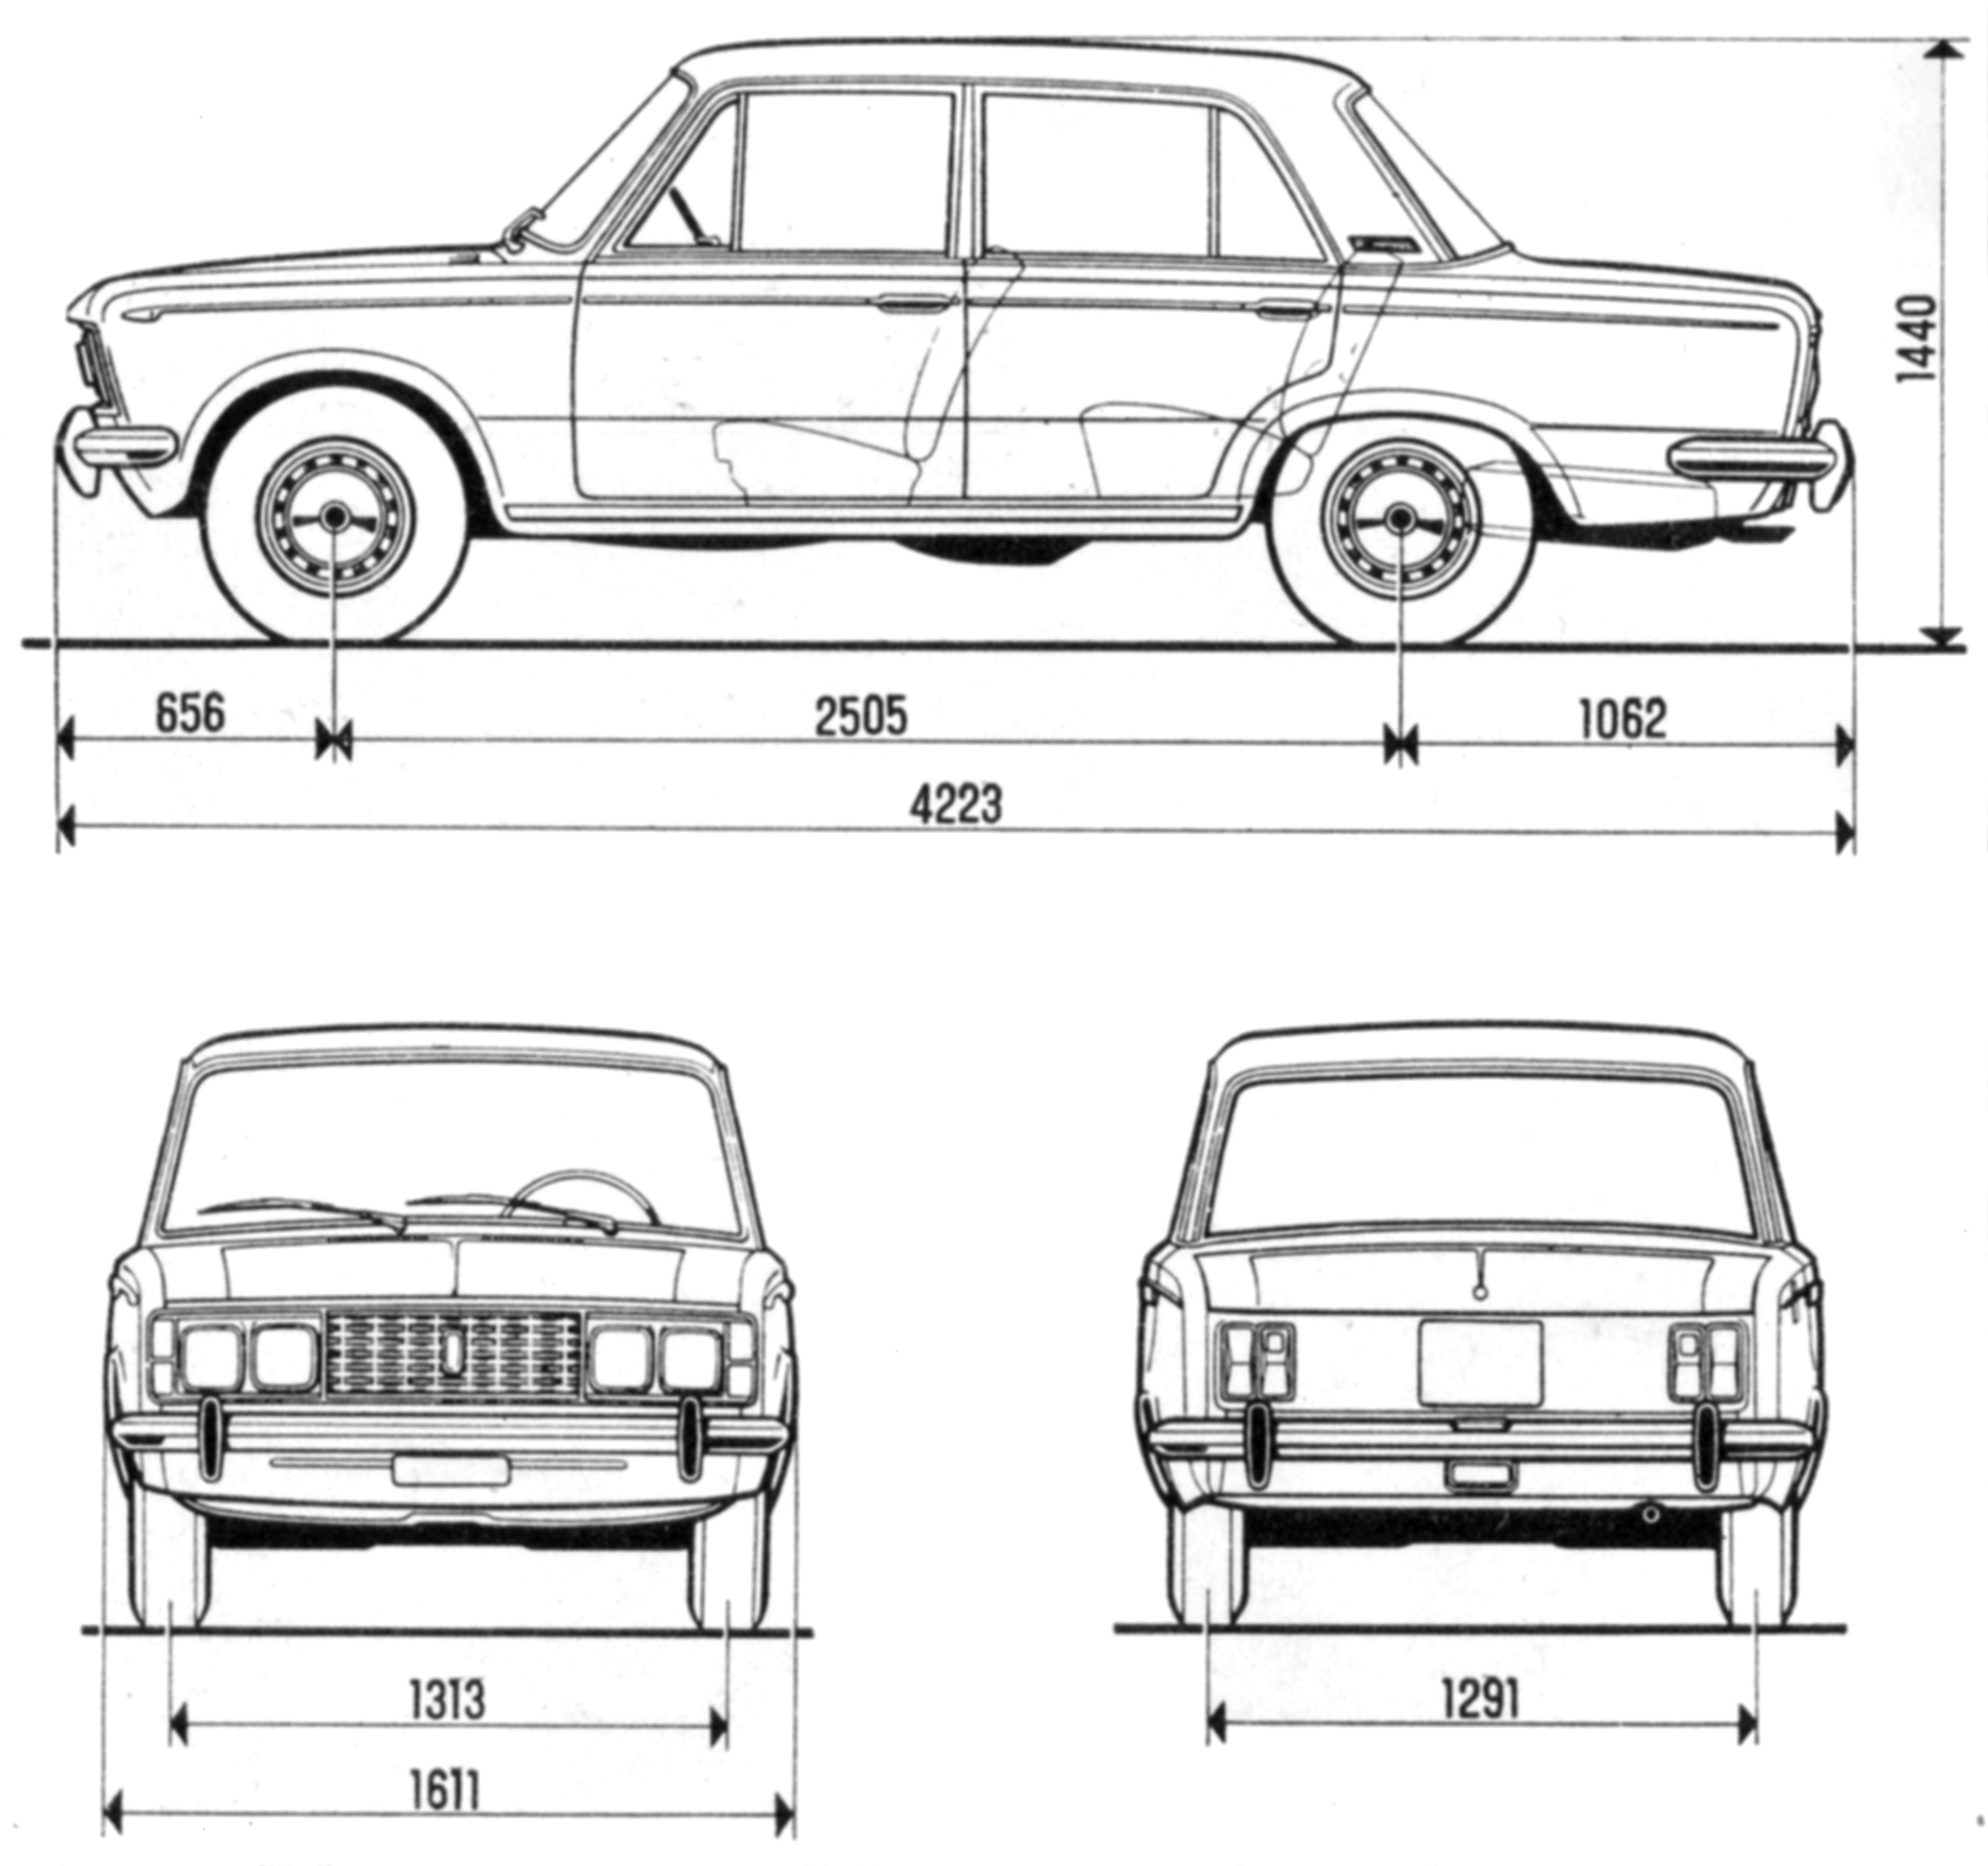 FIAT 125 (1967-1972) dimension drawing